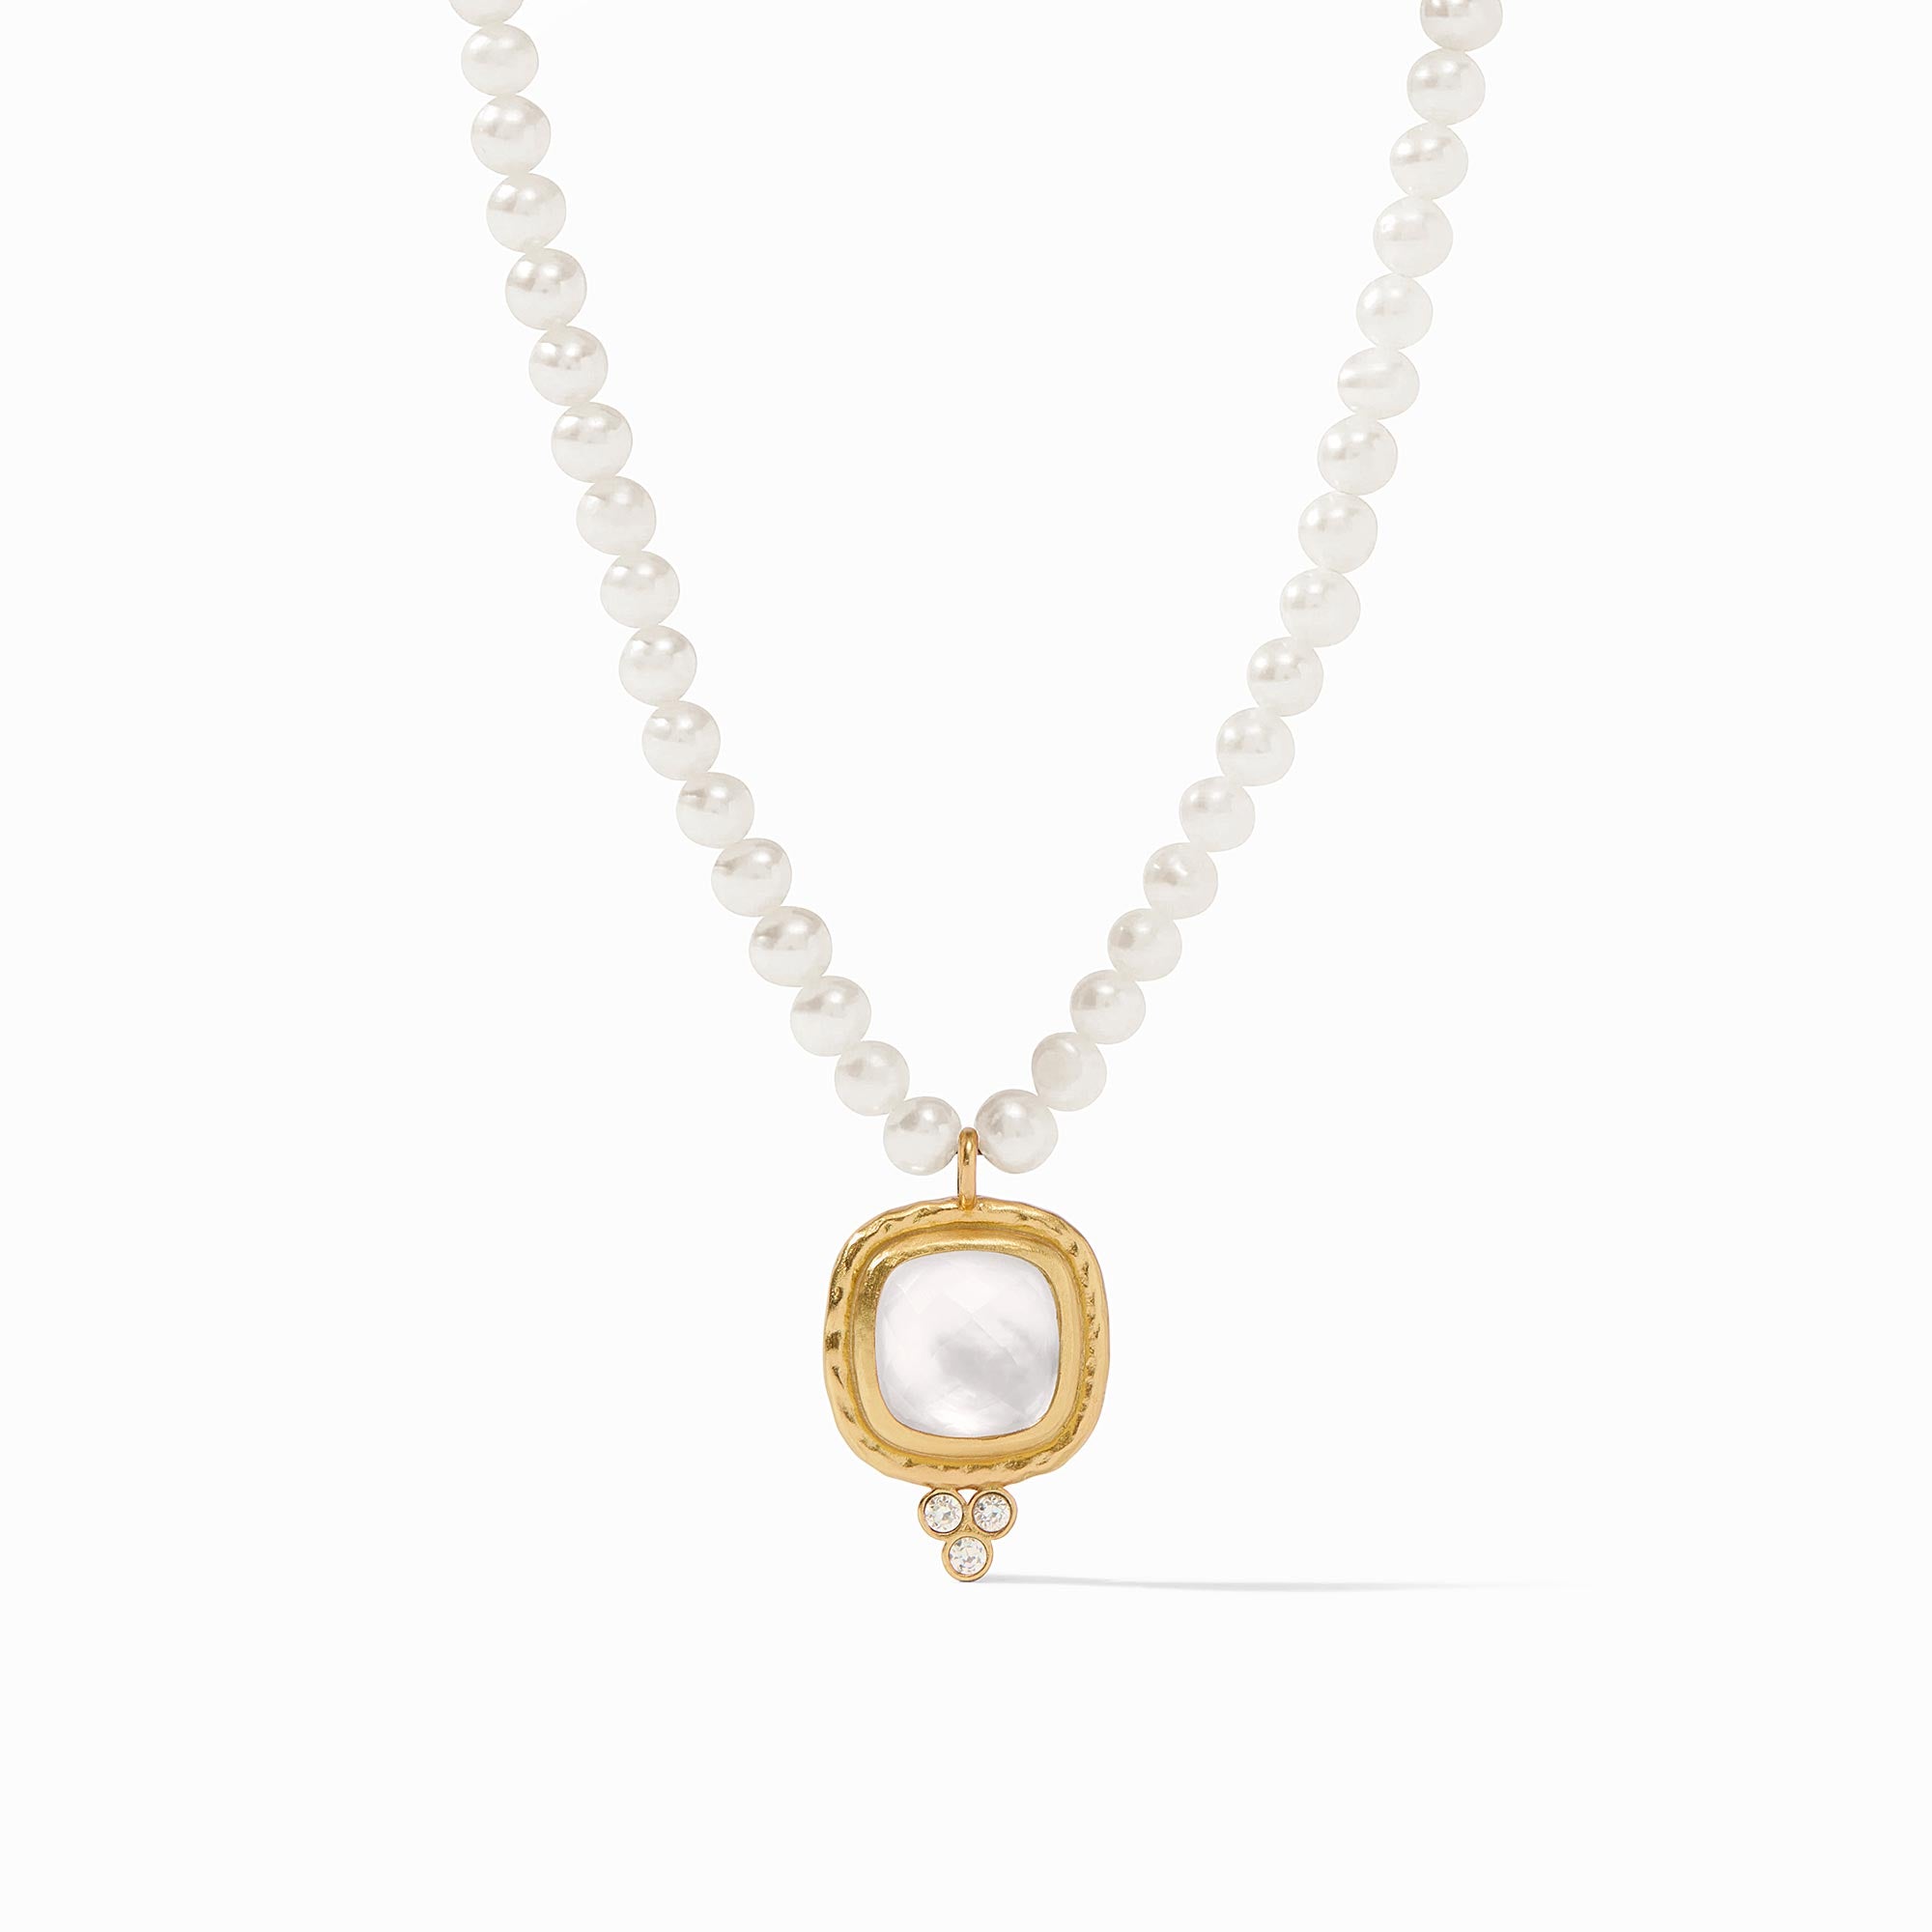 Julie Vos - Tudor Delicate Necklace, Iridescent Clear Crystal